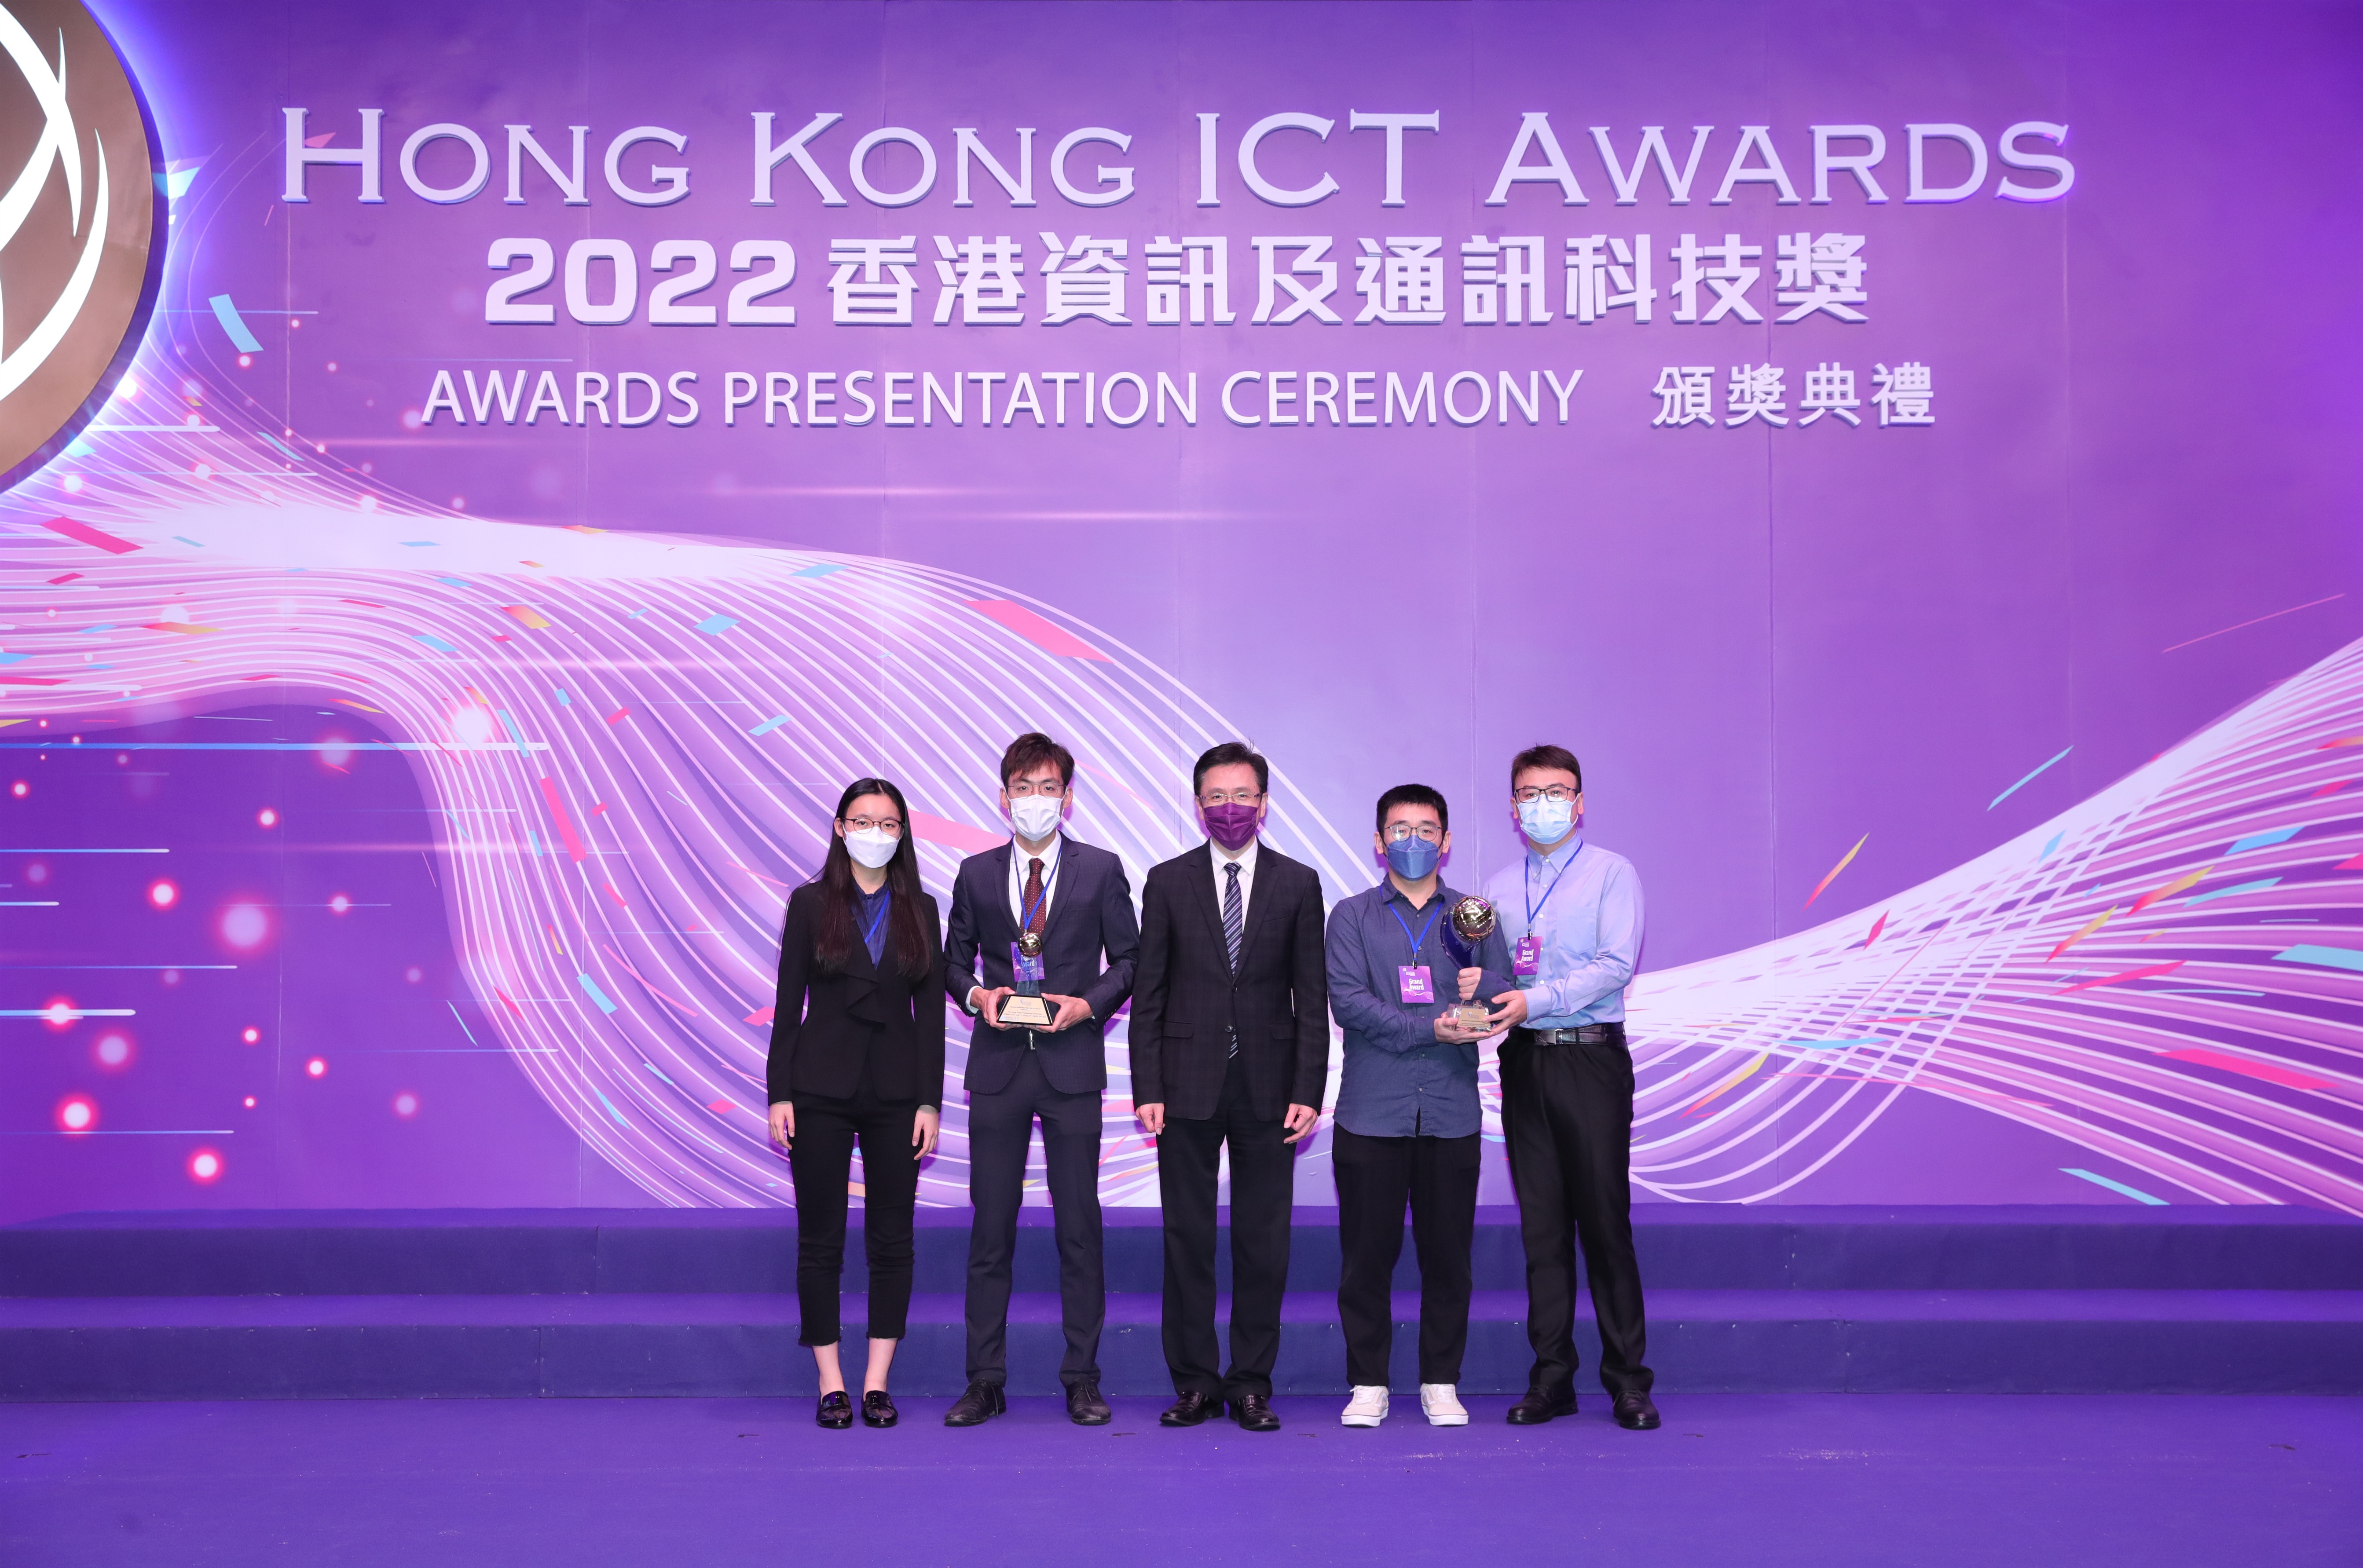 Hong Kong ICT Awards 2022 Student Innovation Grand Award Winner